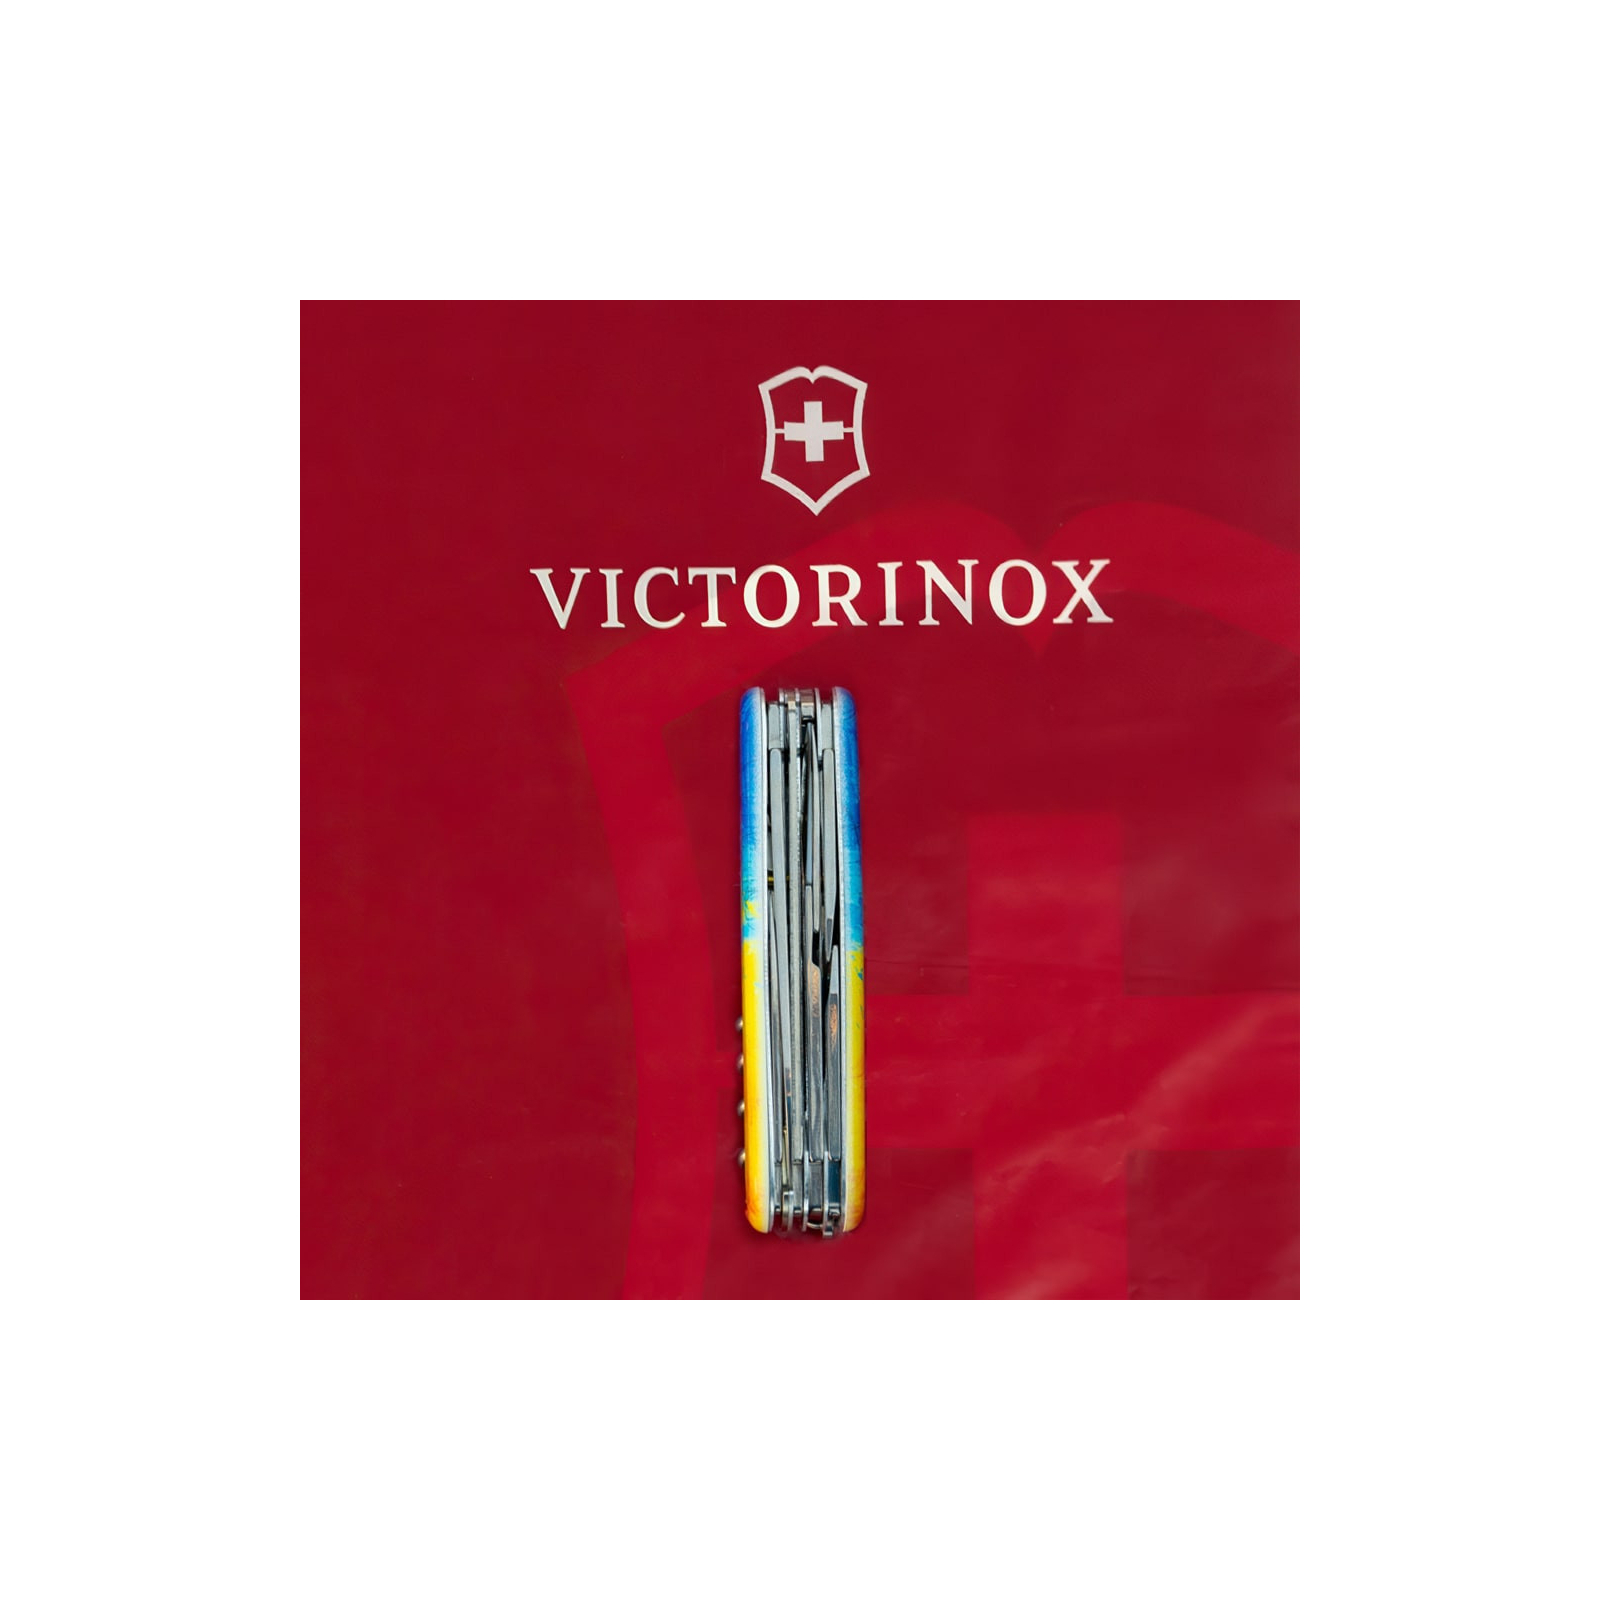 Нож Victorinox Huntsman Ukraine 91 мм Жовто-синій малюнок (1.3713.7_T3100p) изображение 7